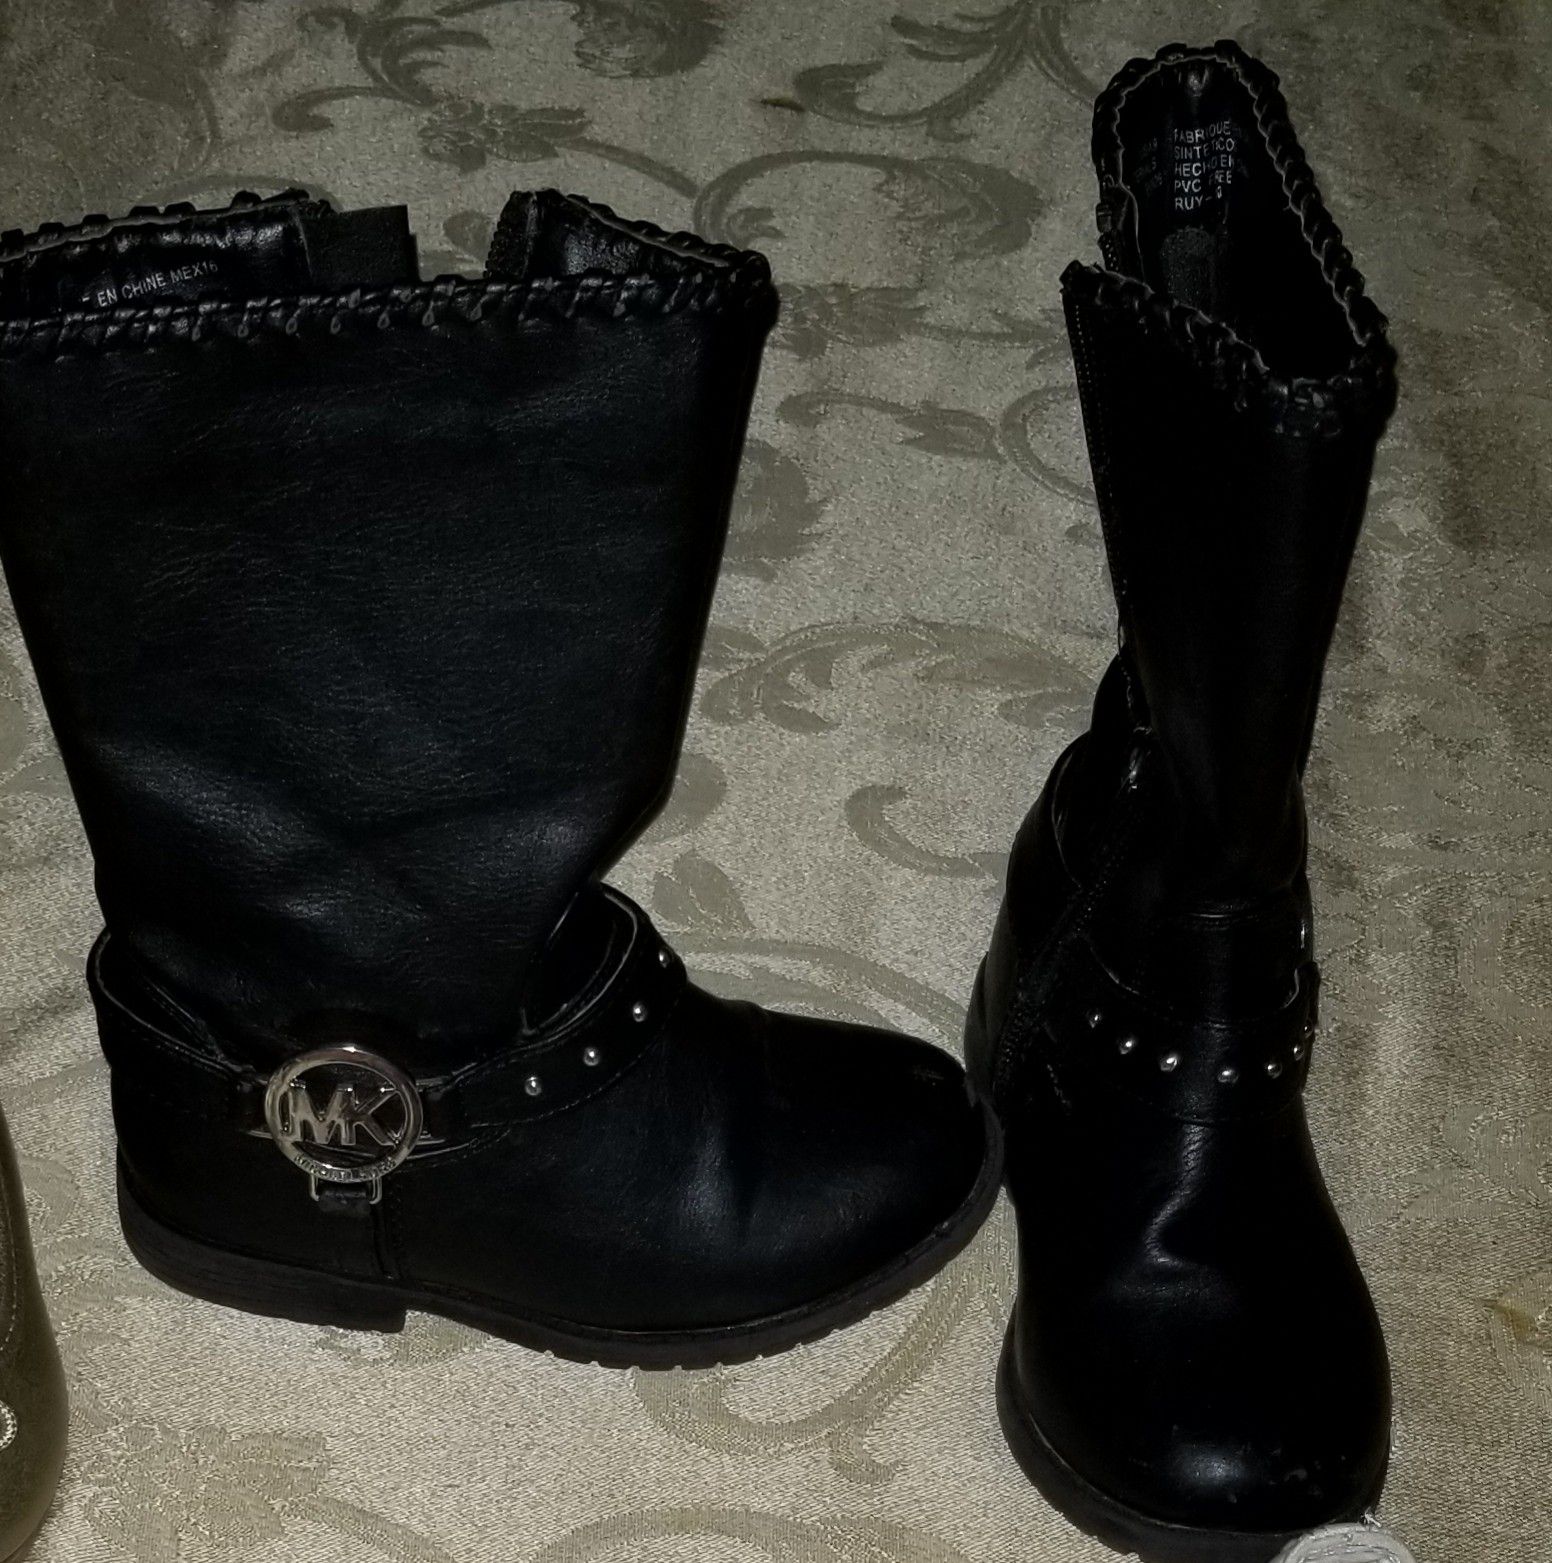 Size 8 1/2 Michael Kors black boots fits toddler